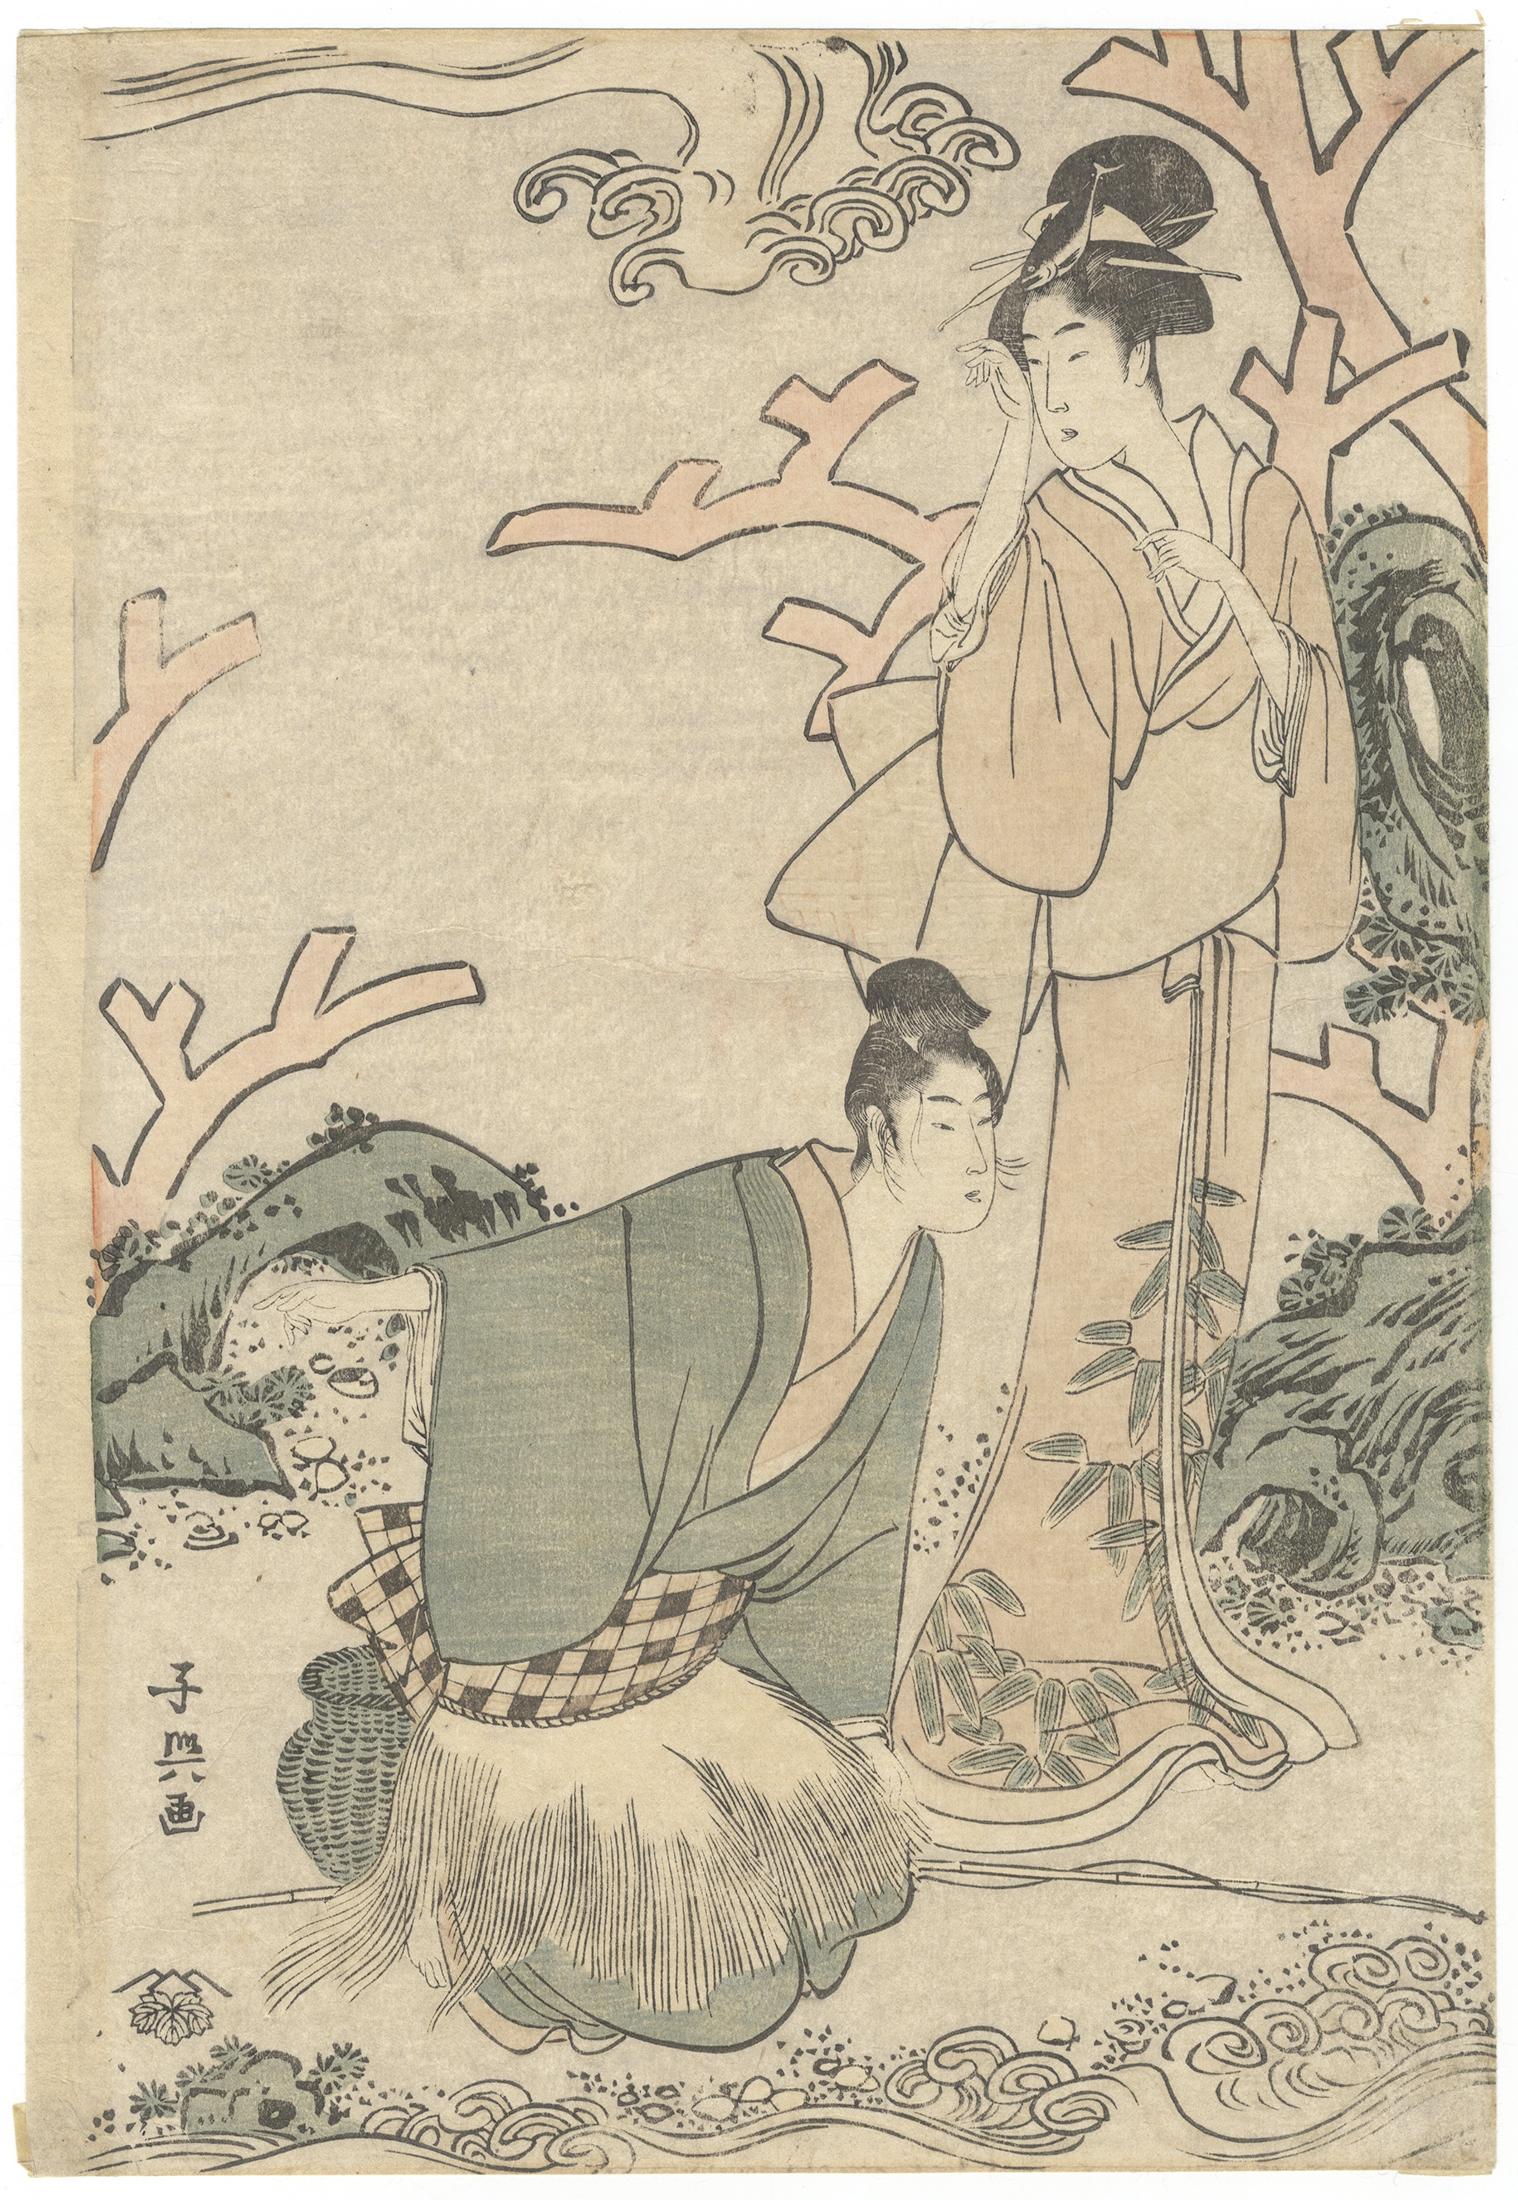 Artist: Choki Eishosai [signed Shiko Hyakusen] (act. 1781-1813)
Title: Parody of Urashima Taro
Publisher: Tsutaya Juzaburo
Date: Late 18th/ Early 19th century 
Dimensions: (L) 22.5 x 32.6 (C) 22.4 x 32.6 (R) 22.7 x 32.4 cm
Condition: Backed. Some